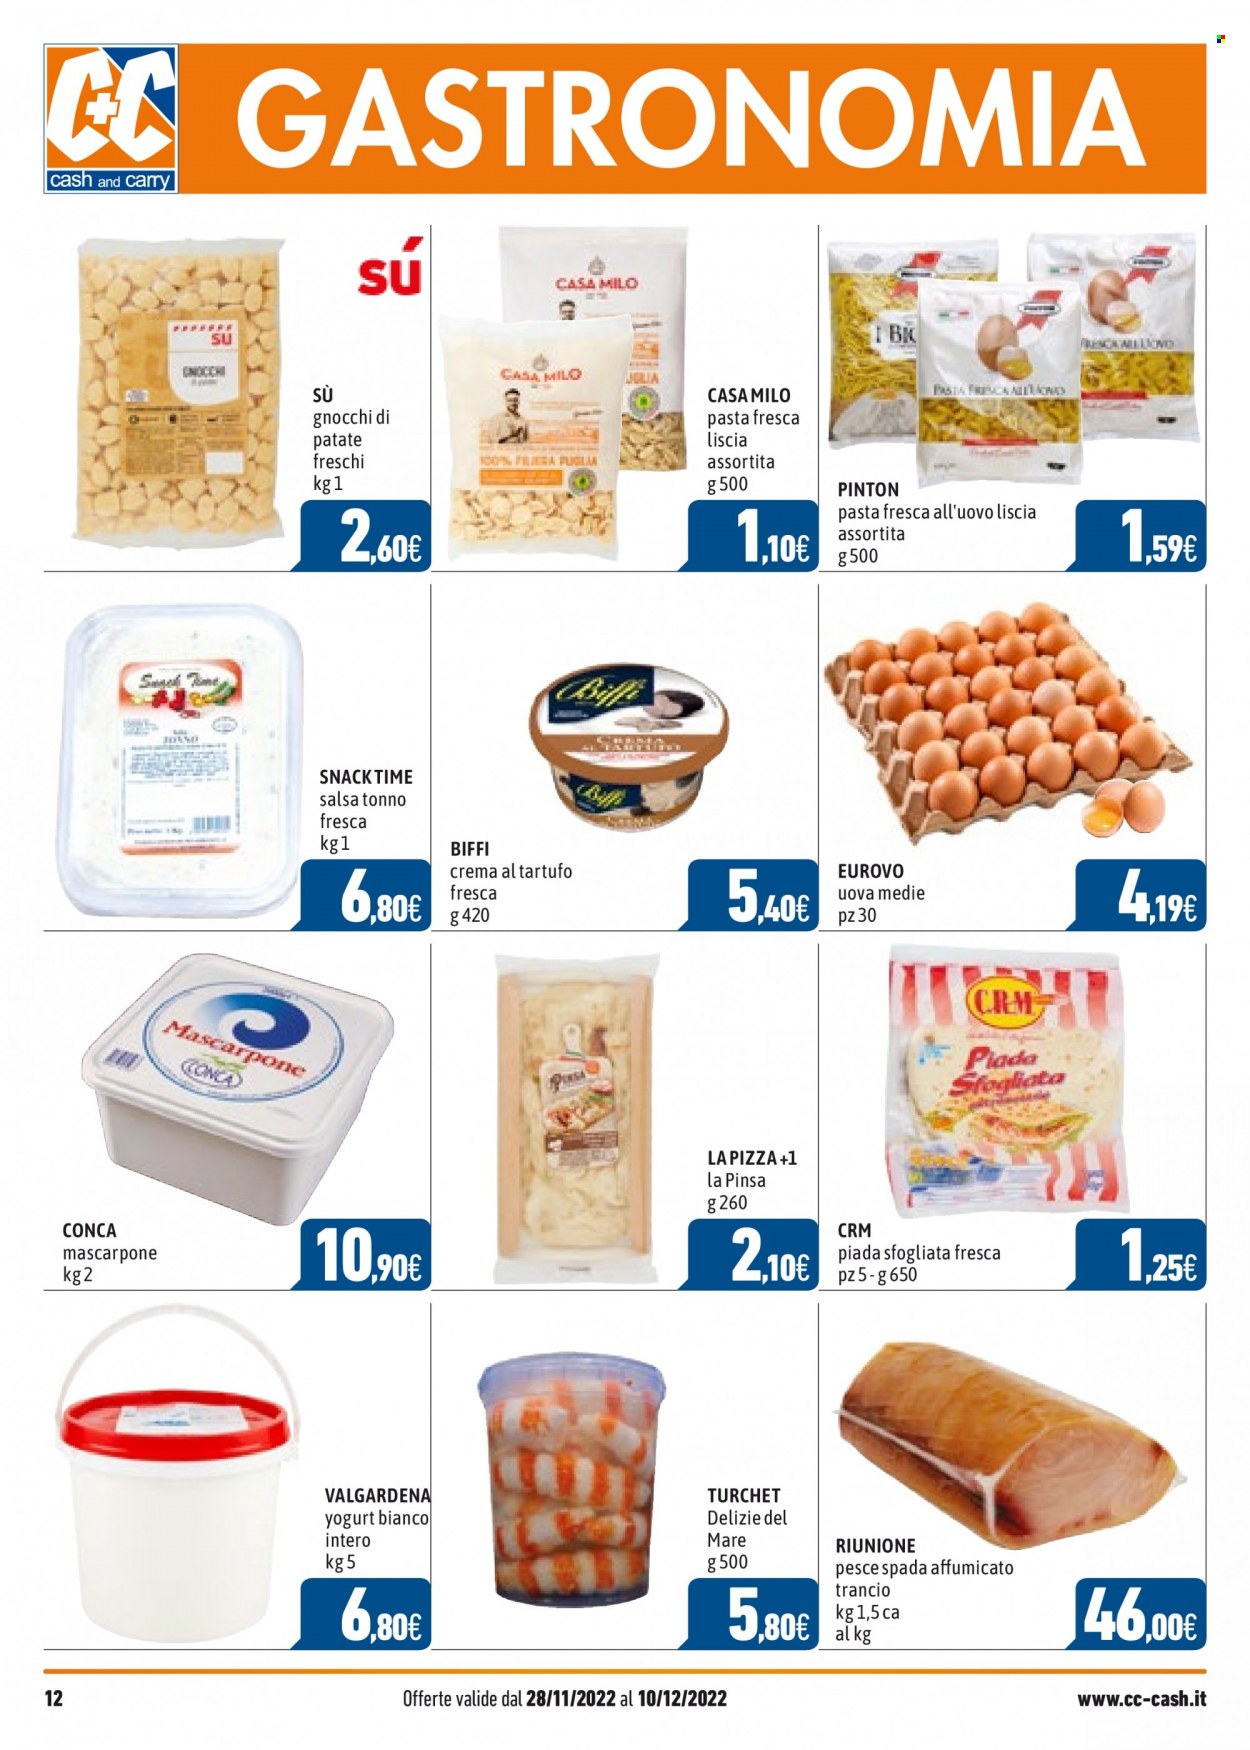 thumbnail - Volantino C+C Cash & Carry - 28/11/2022 - 10/12/2022 - Prodotti in offerta - pesce, pesce spada, pesce spada affumicato, mascarpone, yogurt, uova, gnocchi, pizza, pasta fresca. Pagina 12.